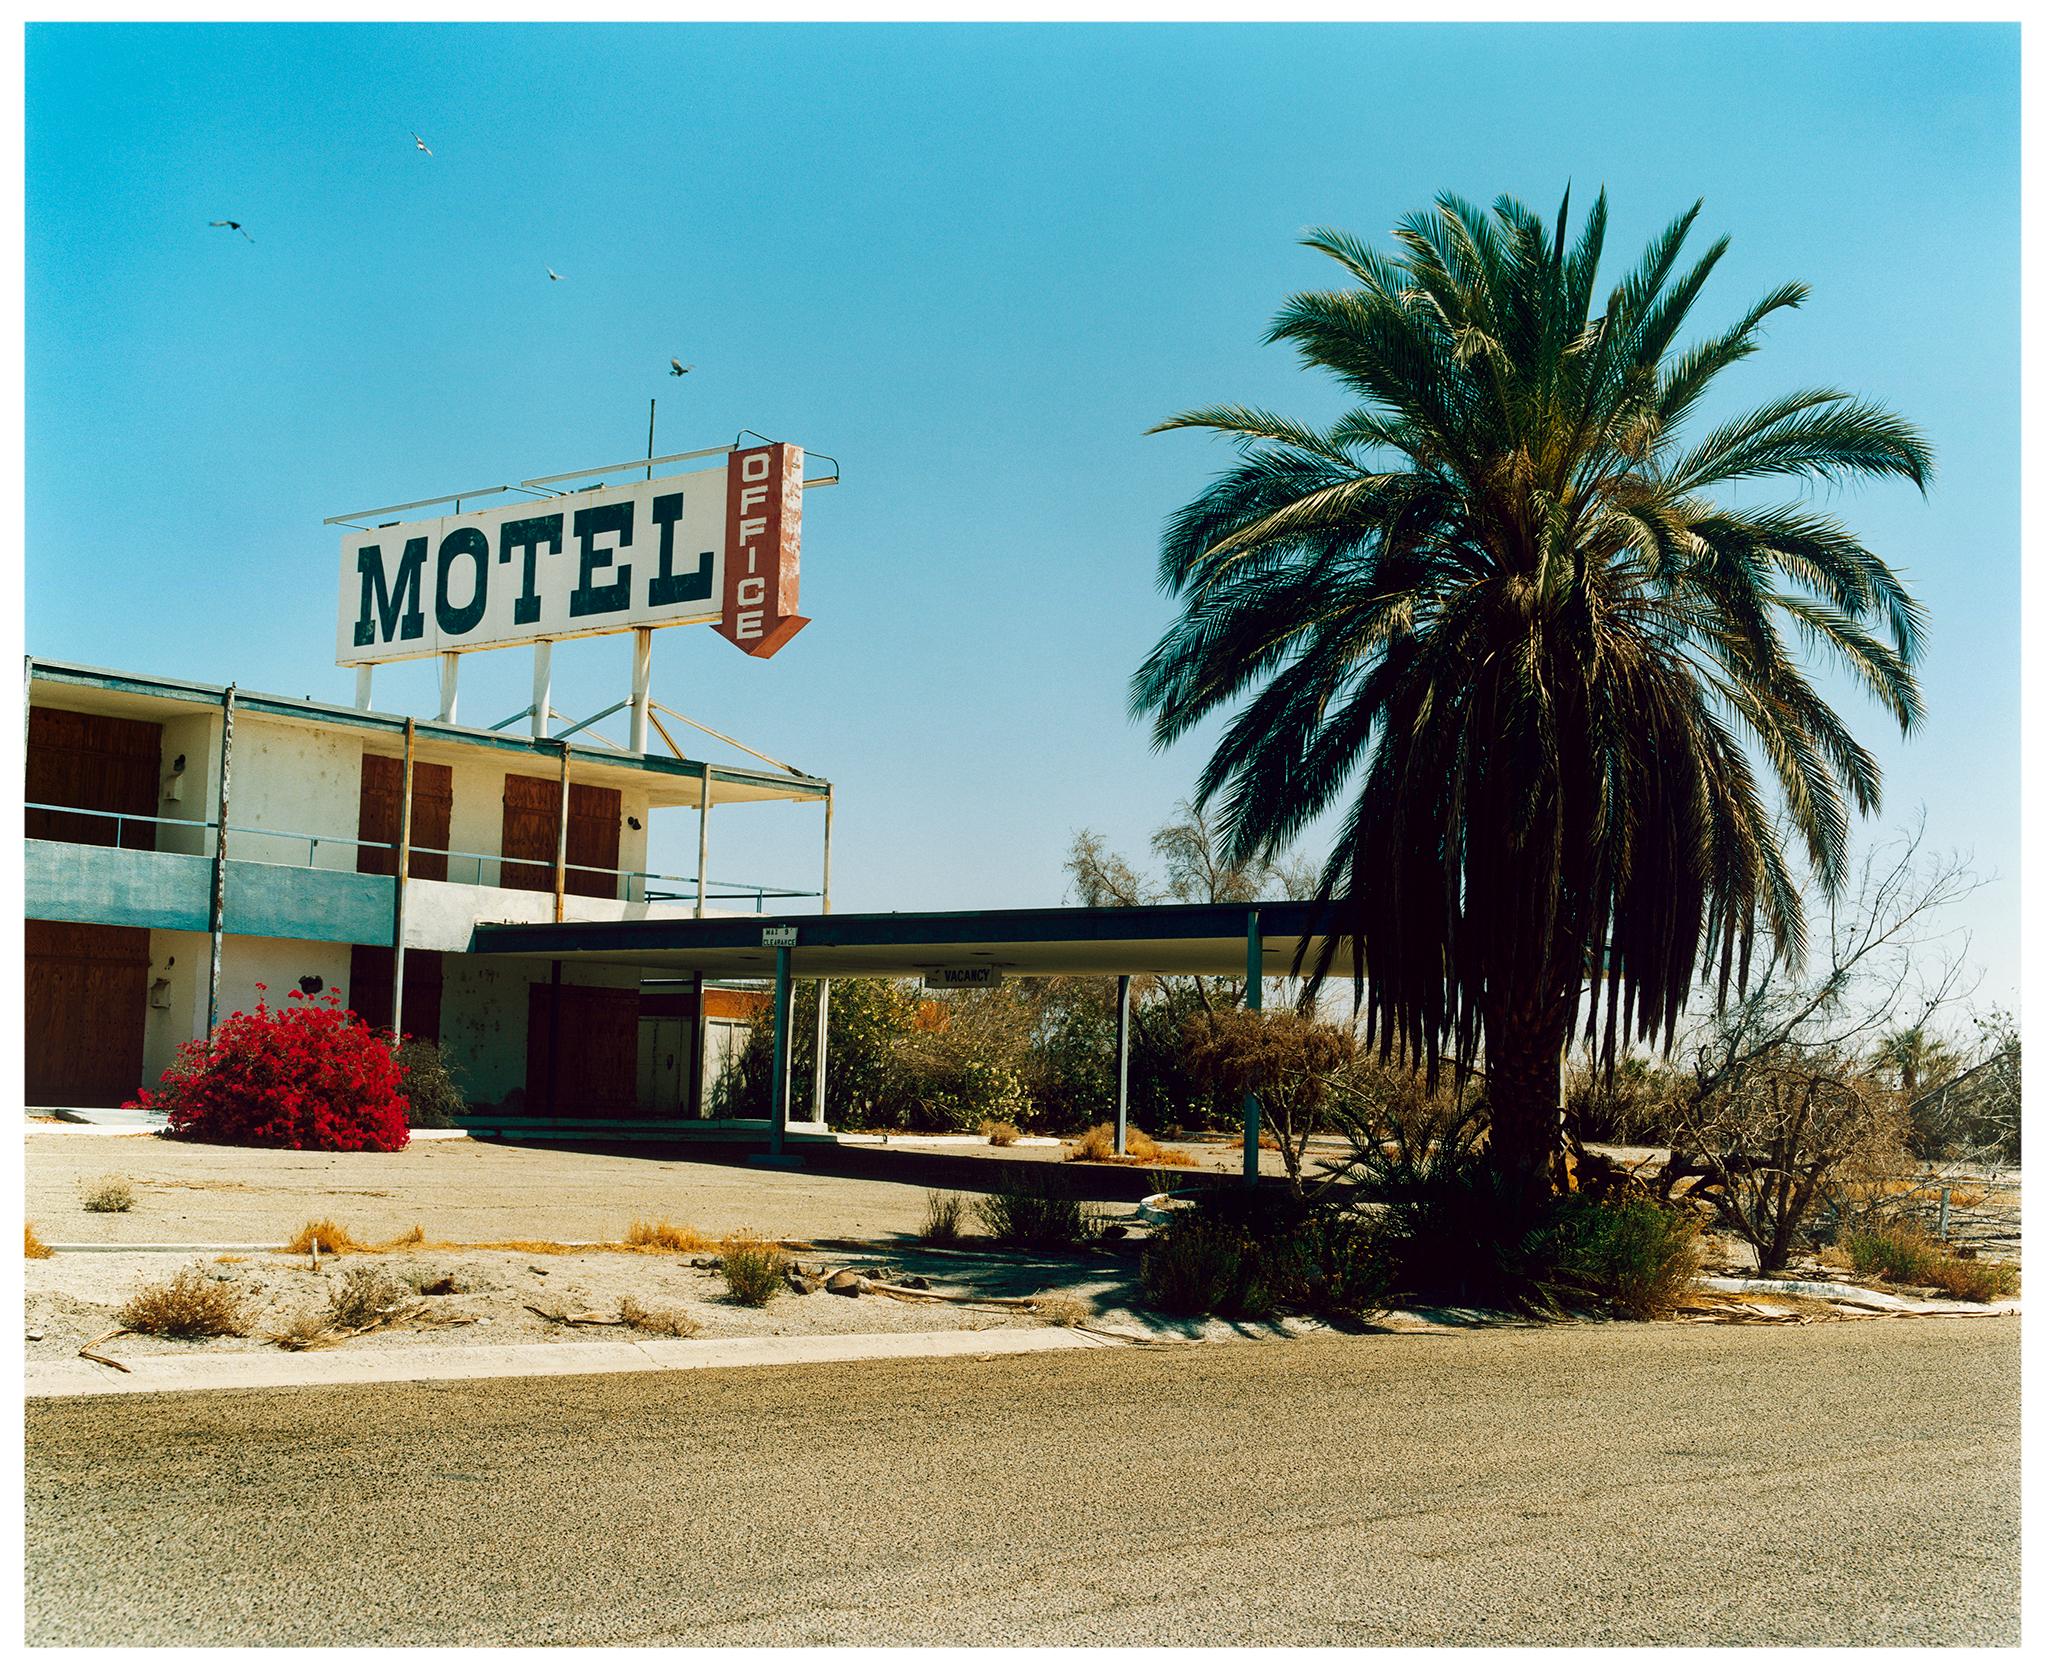 Richard Heeps Landscape Photograph - North Shore Motel Office I, Salton Sea California - Color Photography